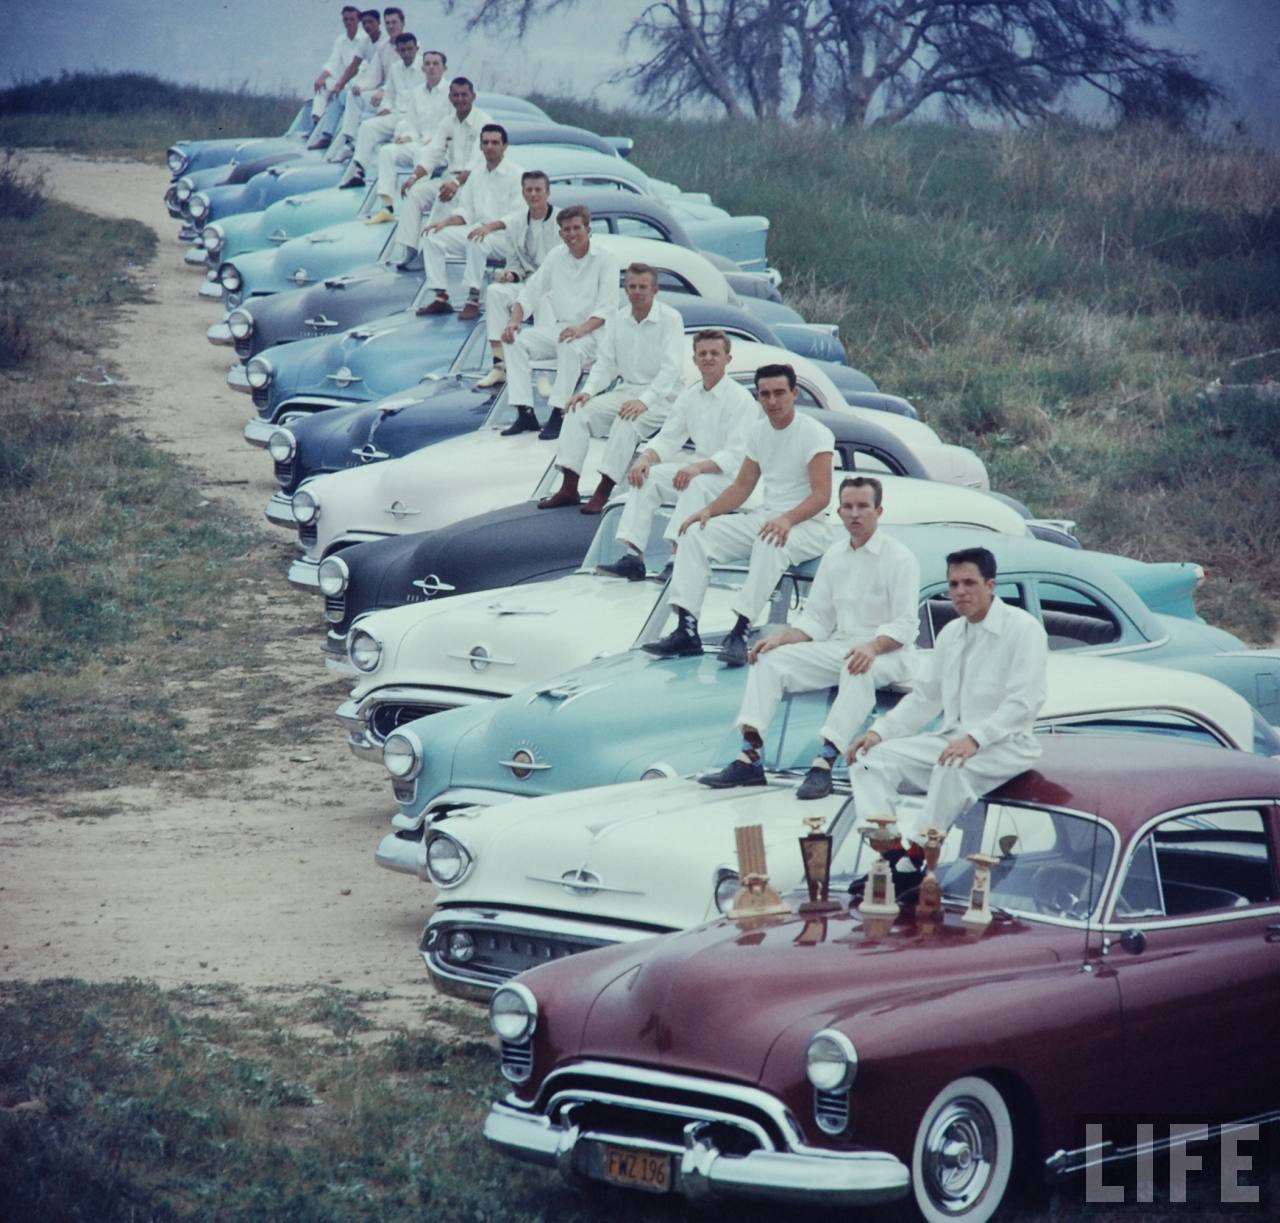 1960. National Hot Rod Association's (NHRA) Drag Racing találkozó Santa Ana, California..jpg